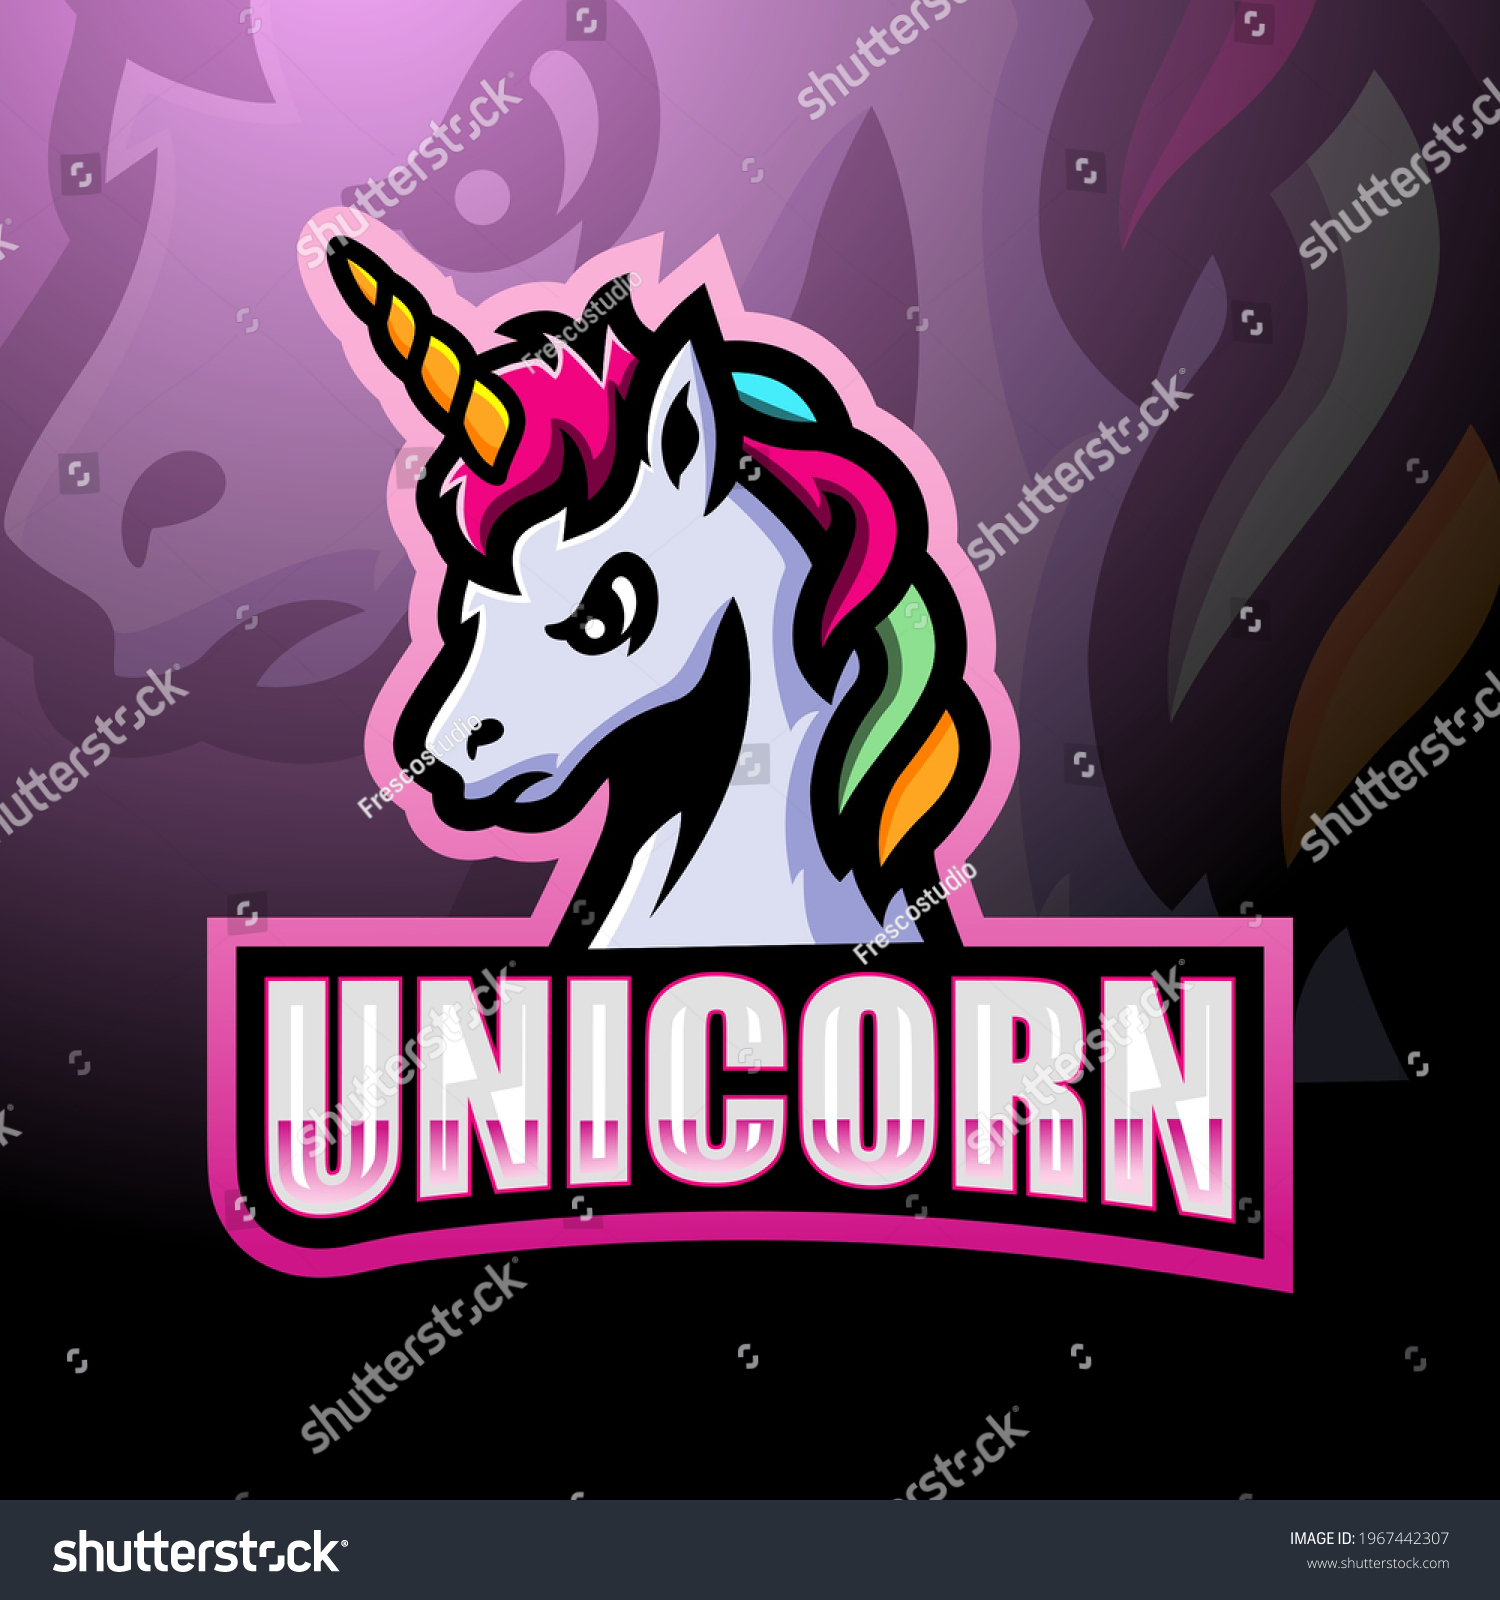 SVG of Unicorn mascot esport logo design svg